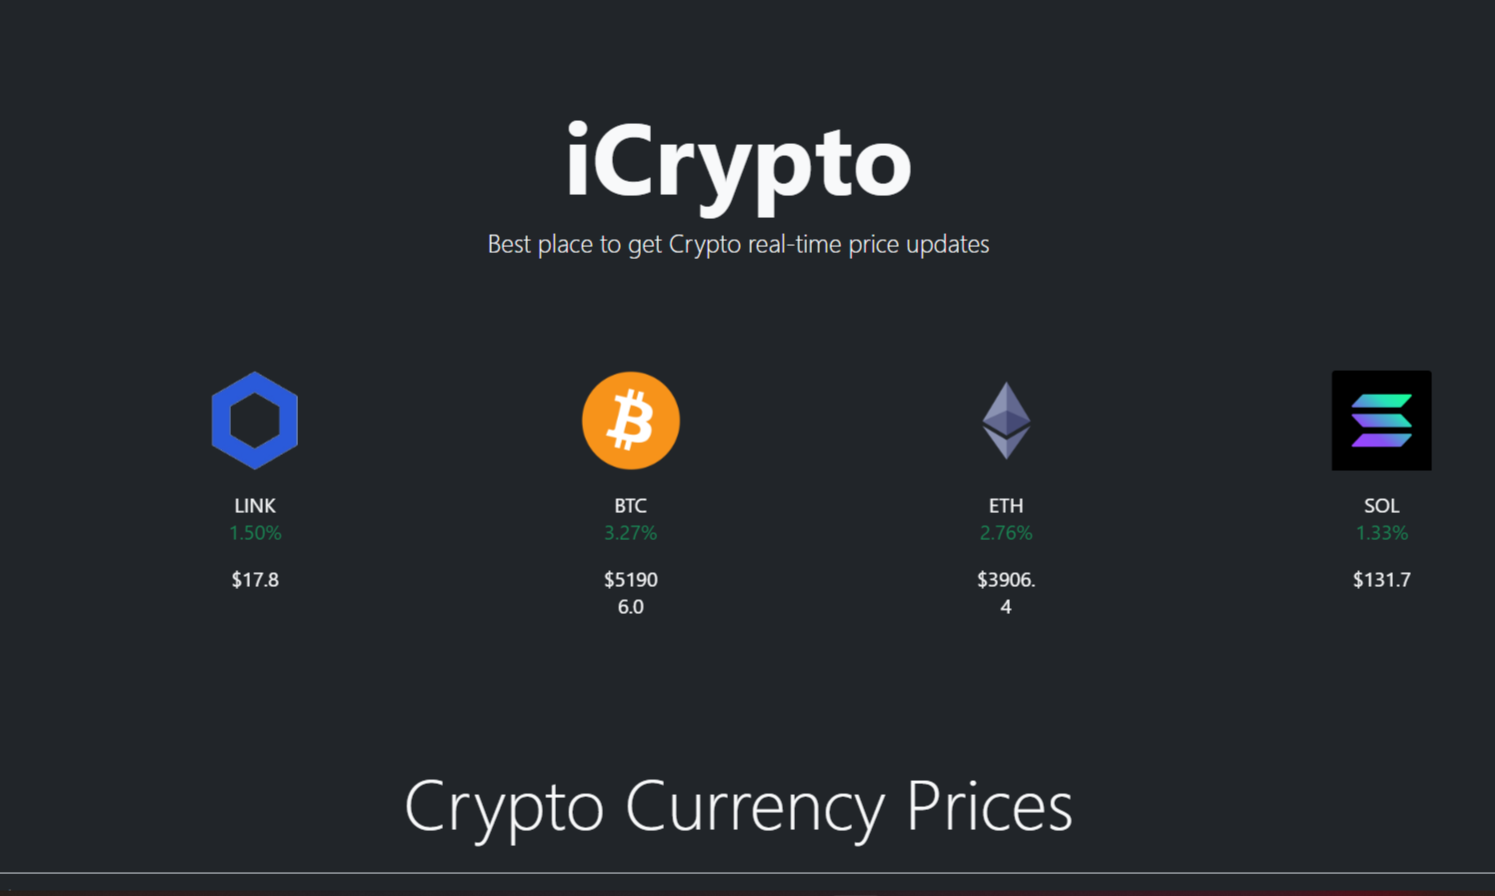 Crypto Price Tracker